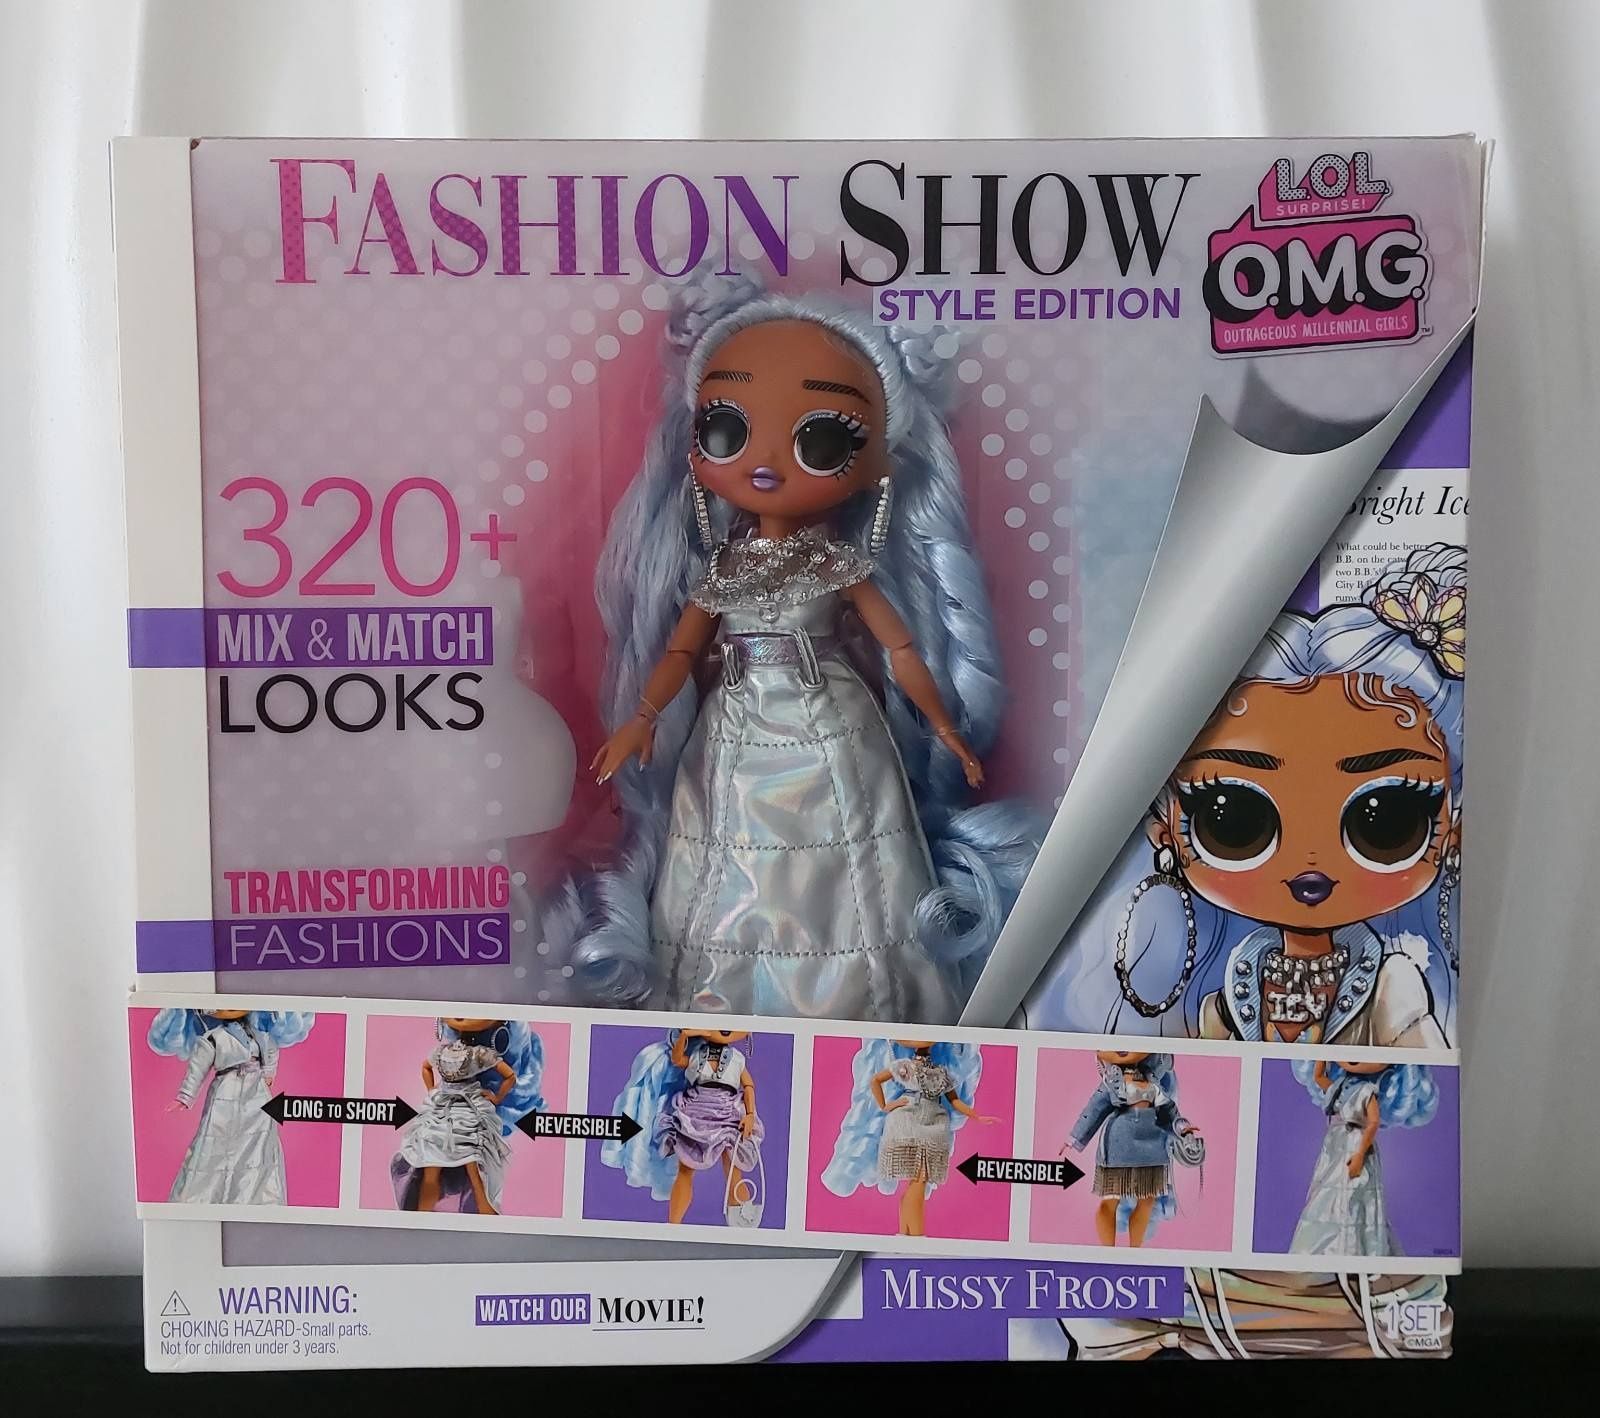 лялечки серії «O.M.G. Fashion Show» від L.O.L. Surprise